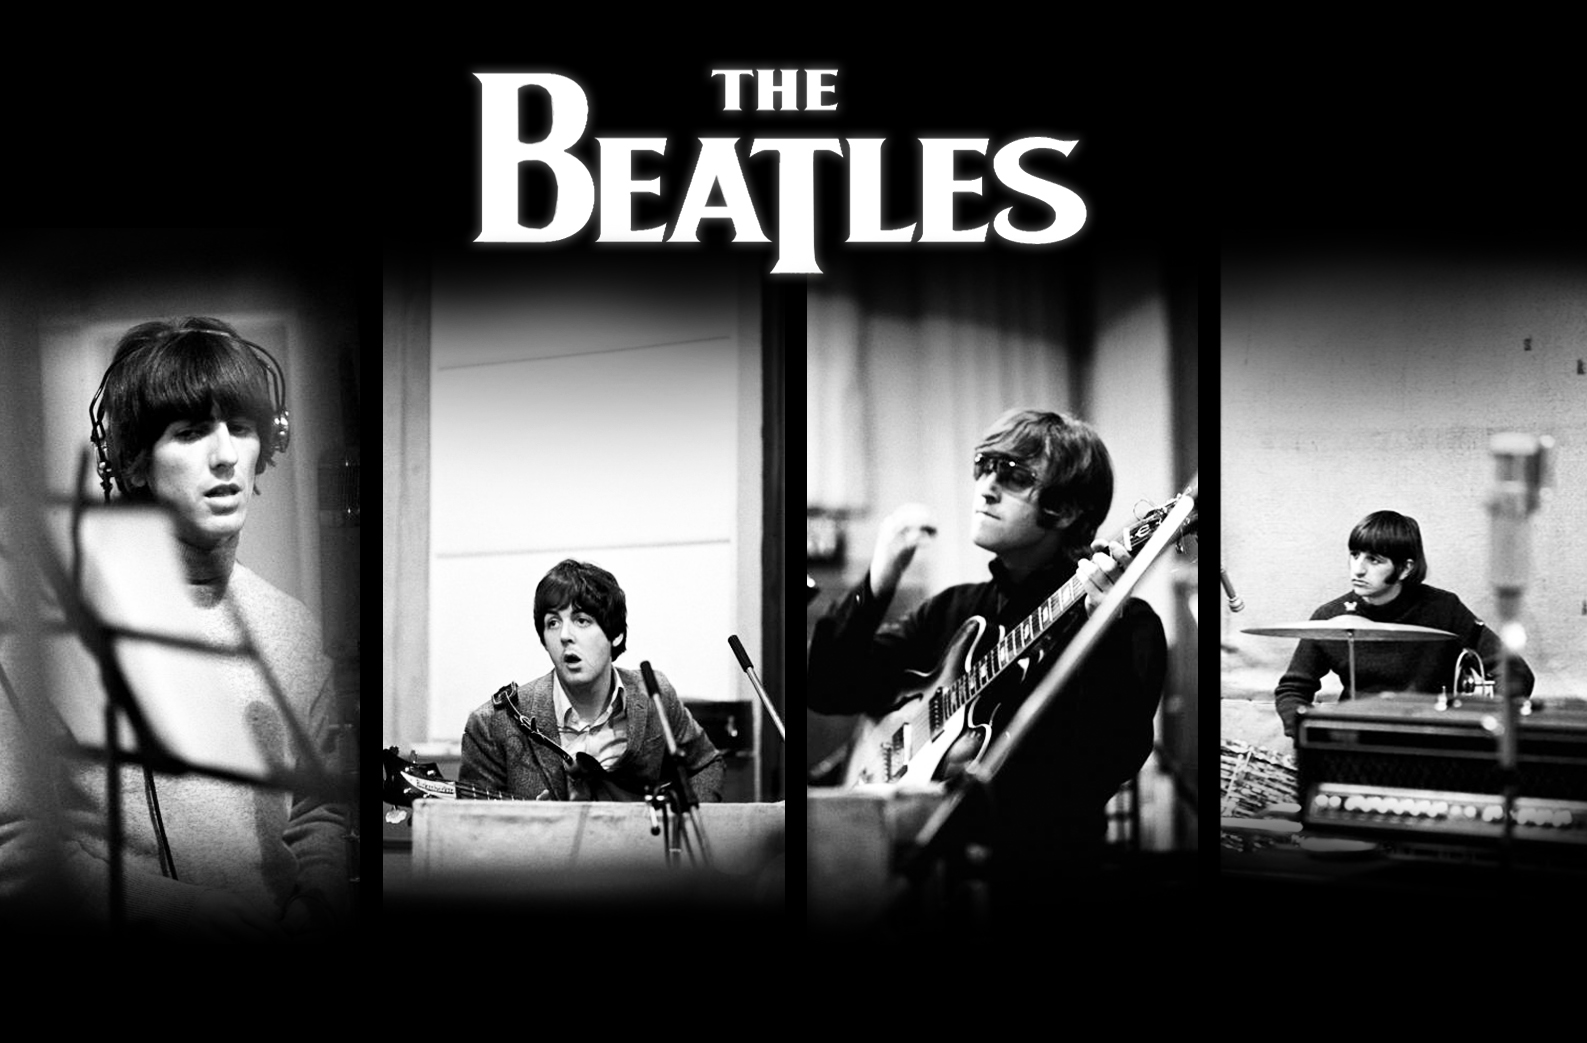 The Beatles John Lennon Paul McCartney Ringo Starr George Harrison Musician Rock Bands Electric Guit 1587x1043